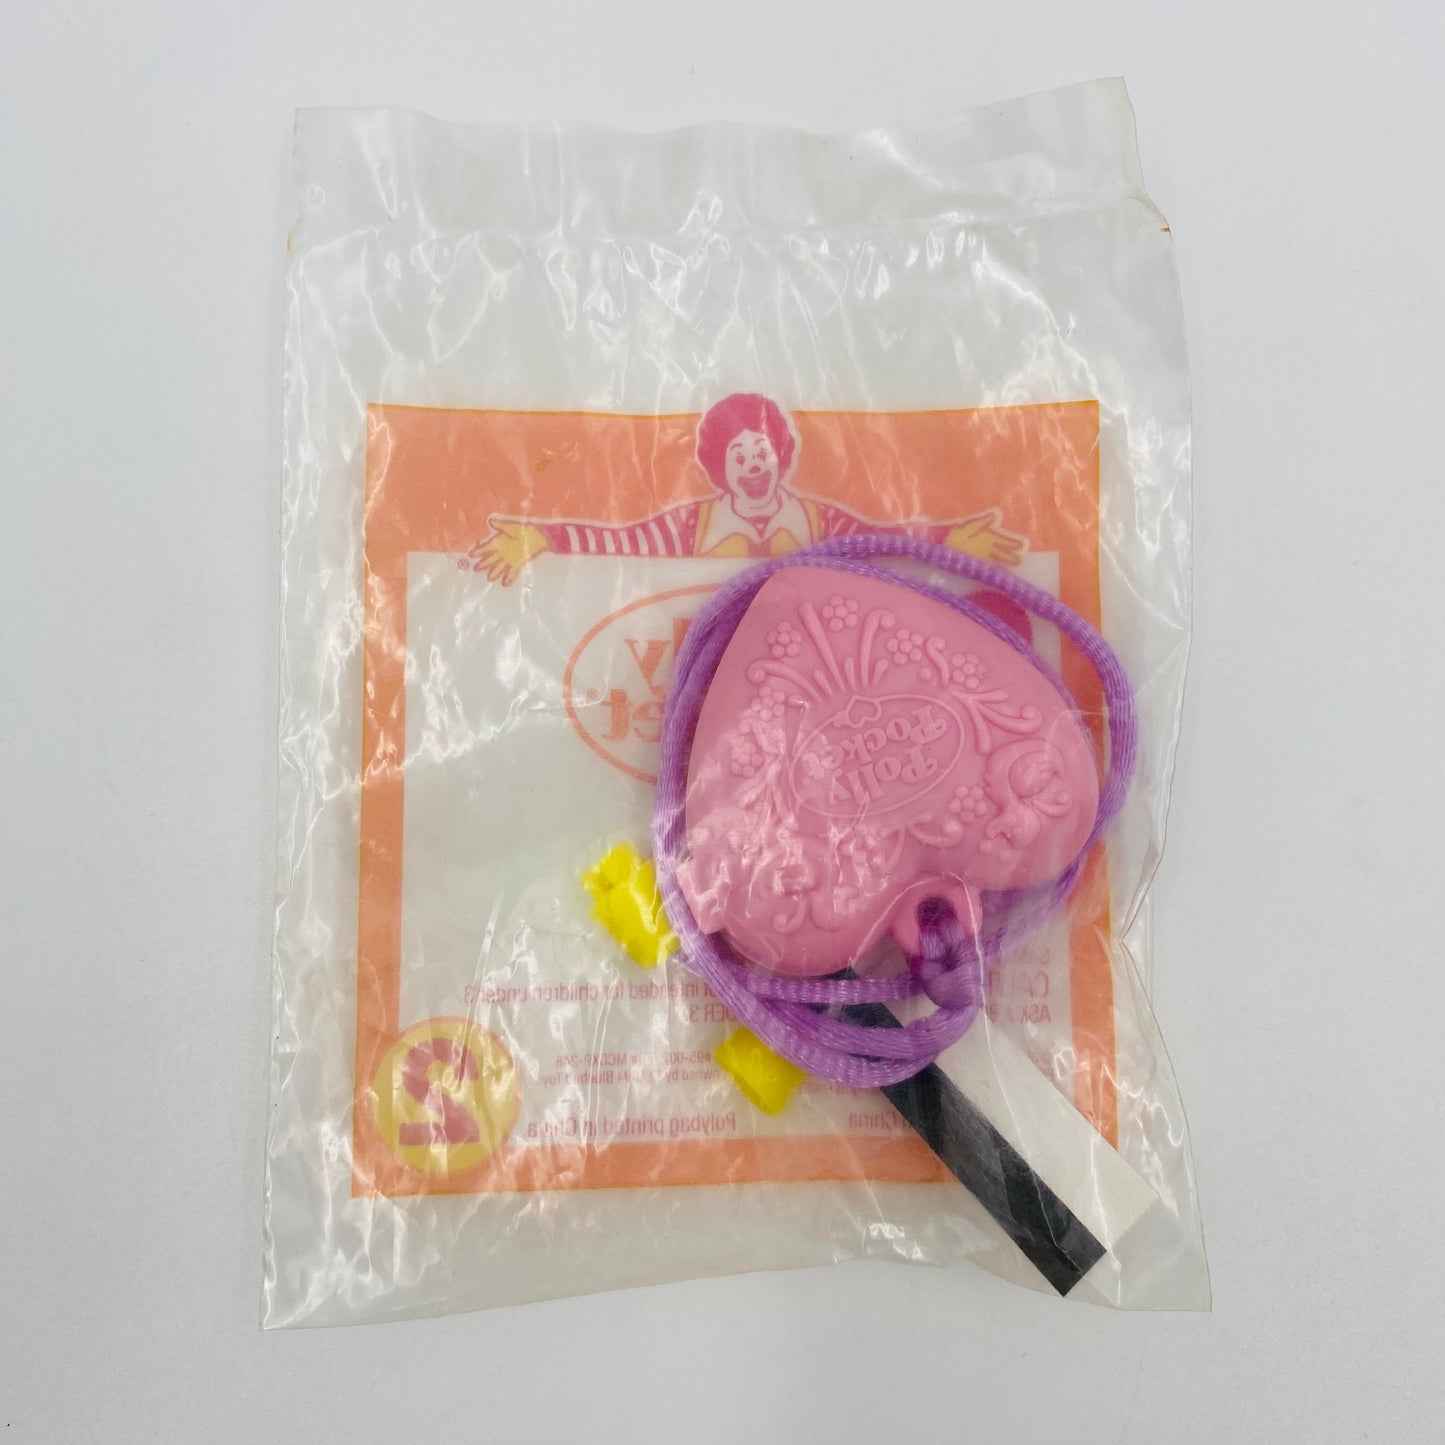 Polly Pocket Locket McDonald's Happy Meal toy (1994) bagged